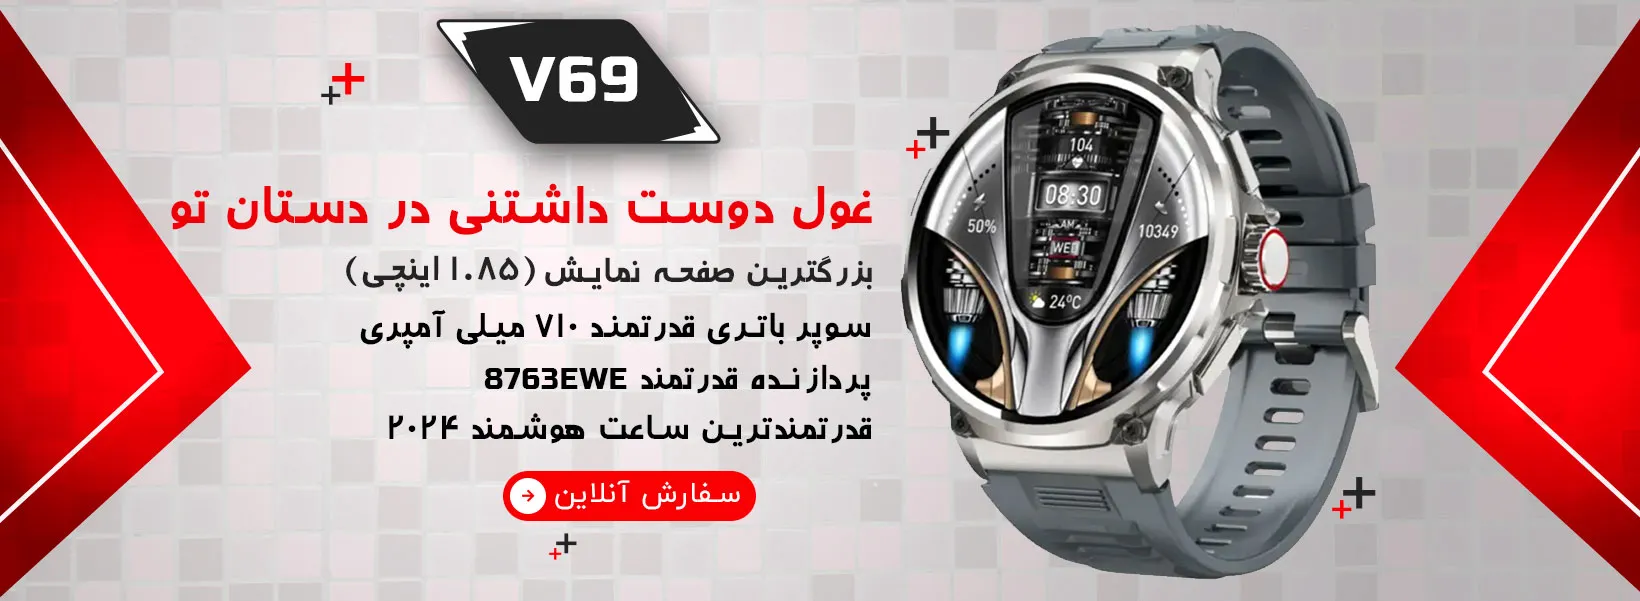 ساعت هوشمند مدل V69